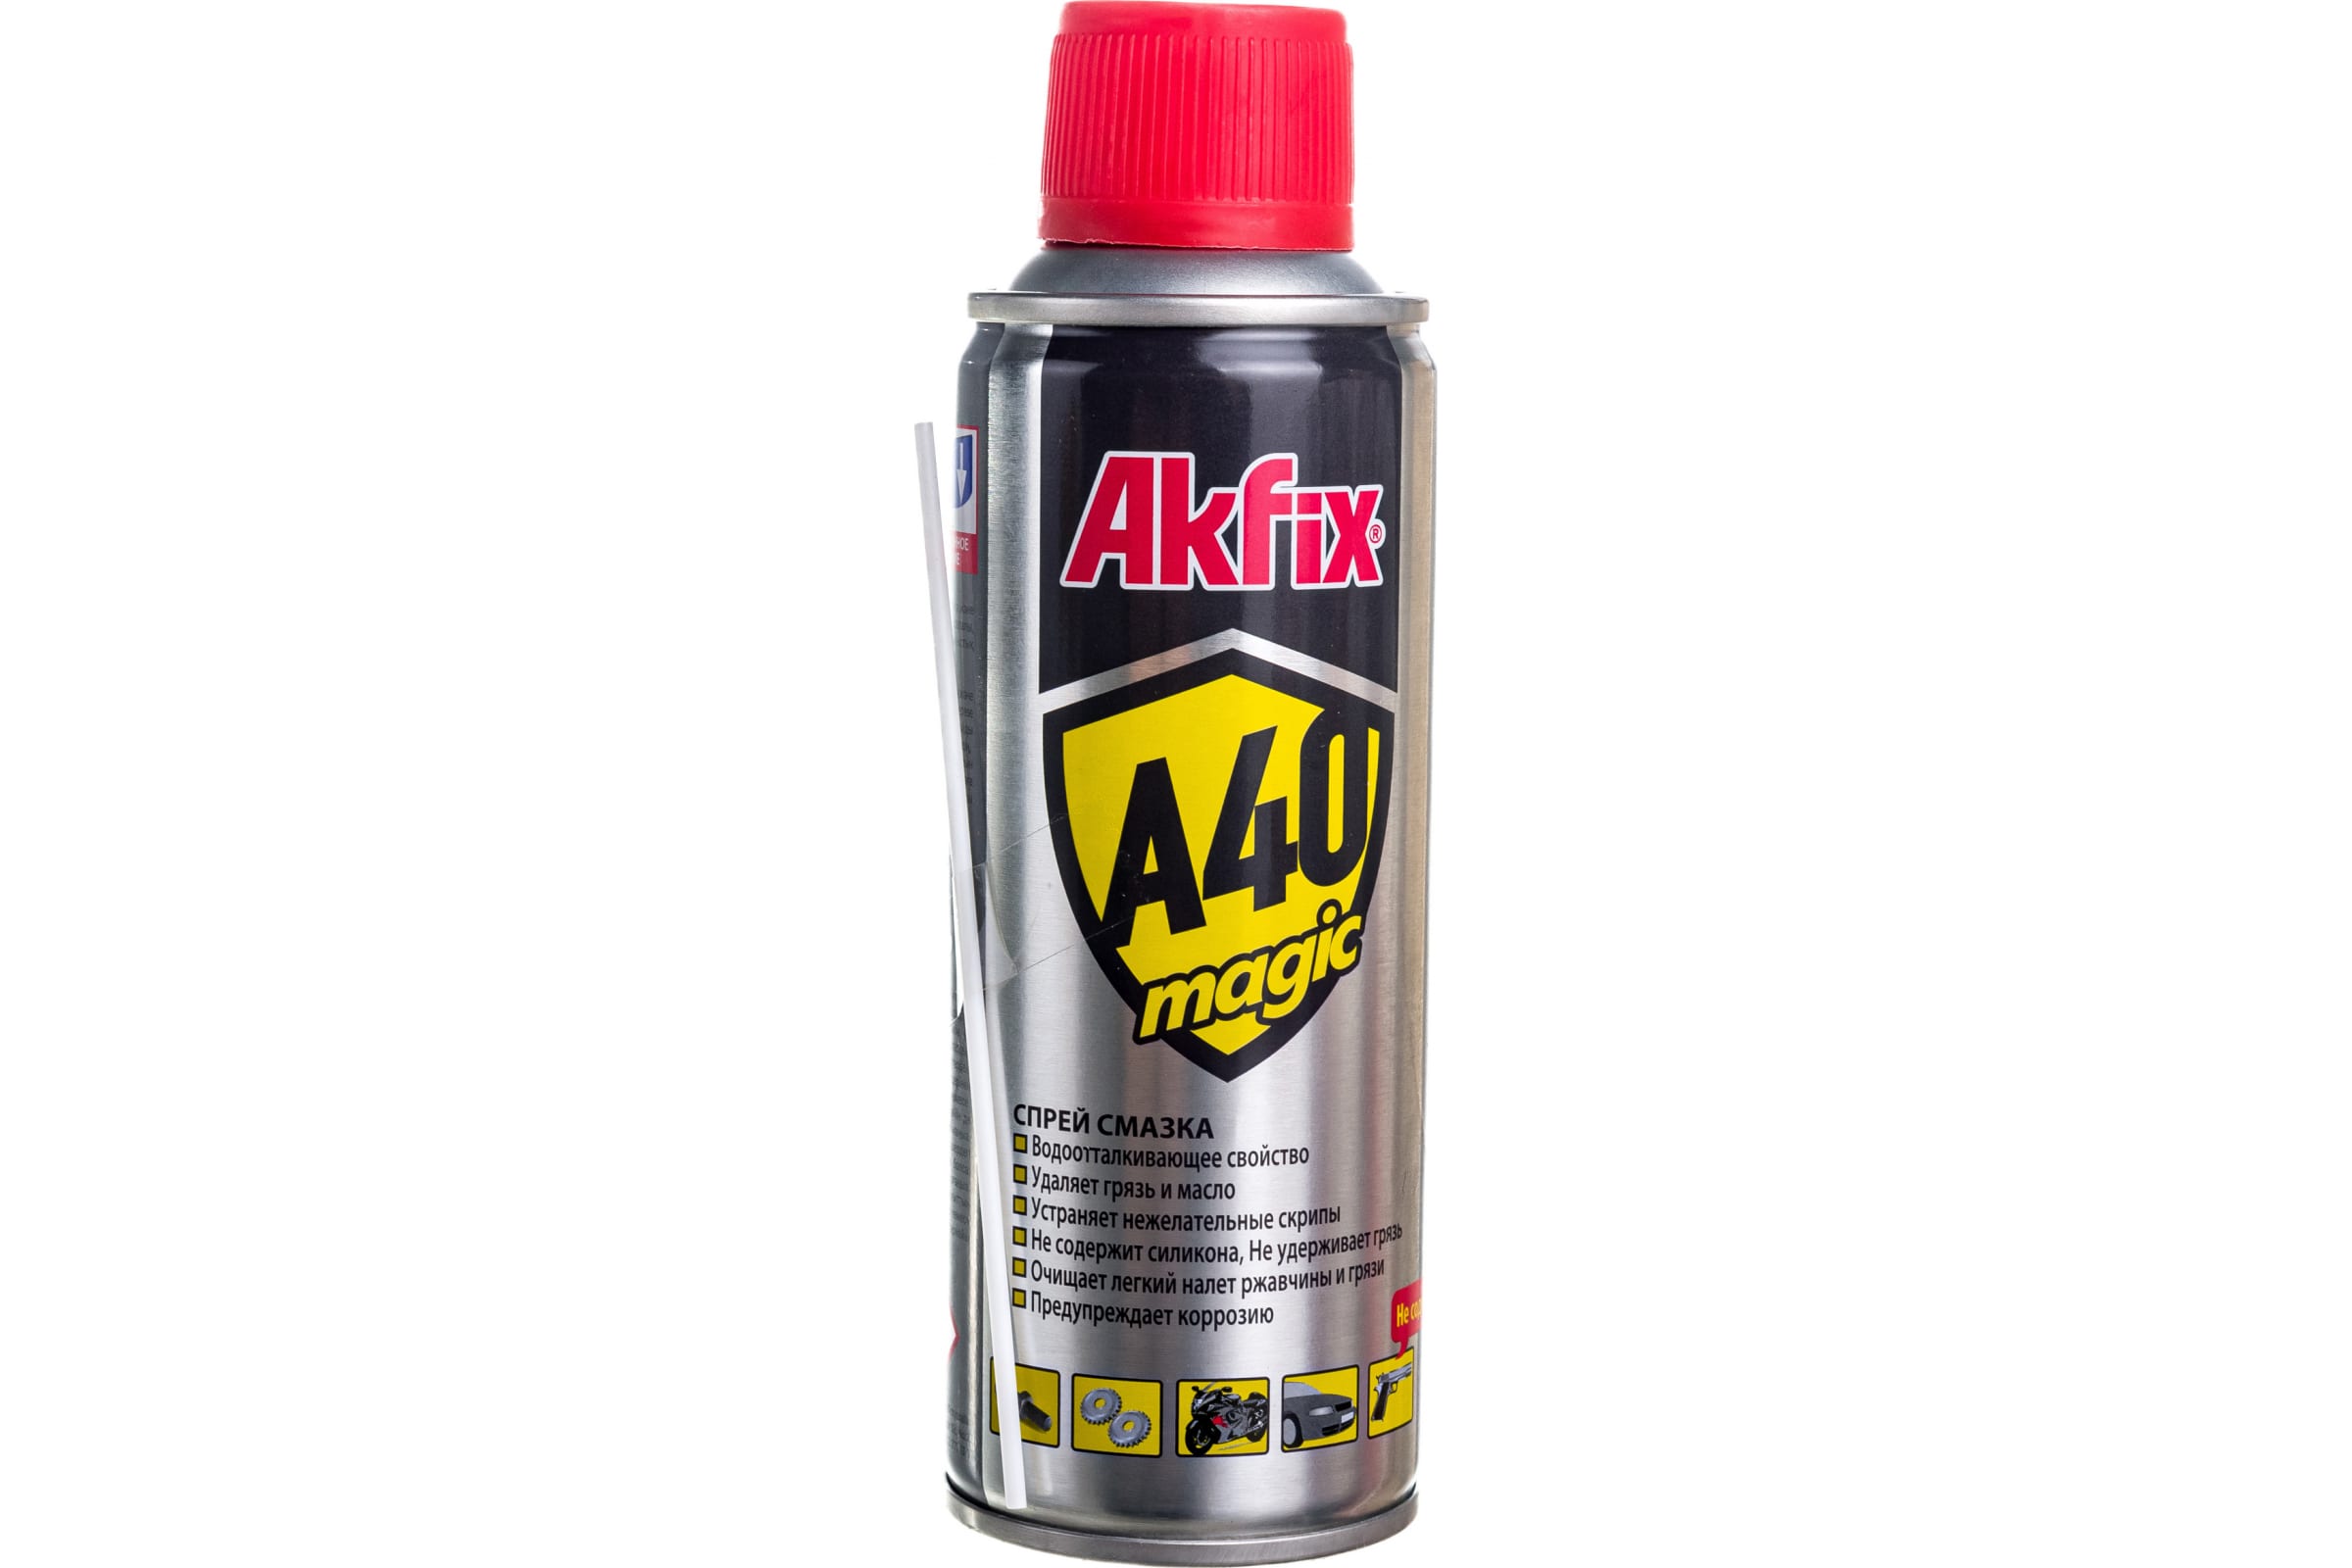 Akfix Универсальная смазка A40 Magic, 200 мл YA420 redverg смазка redverg универсальная 125г